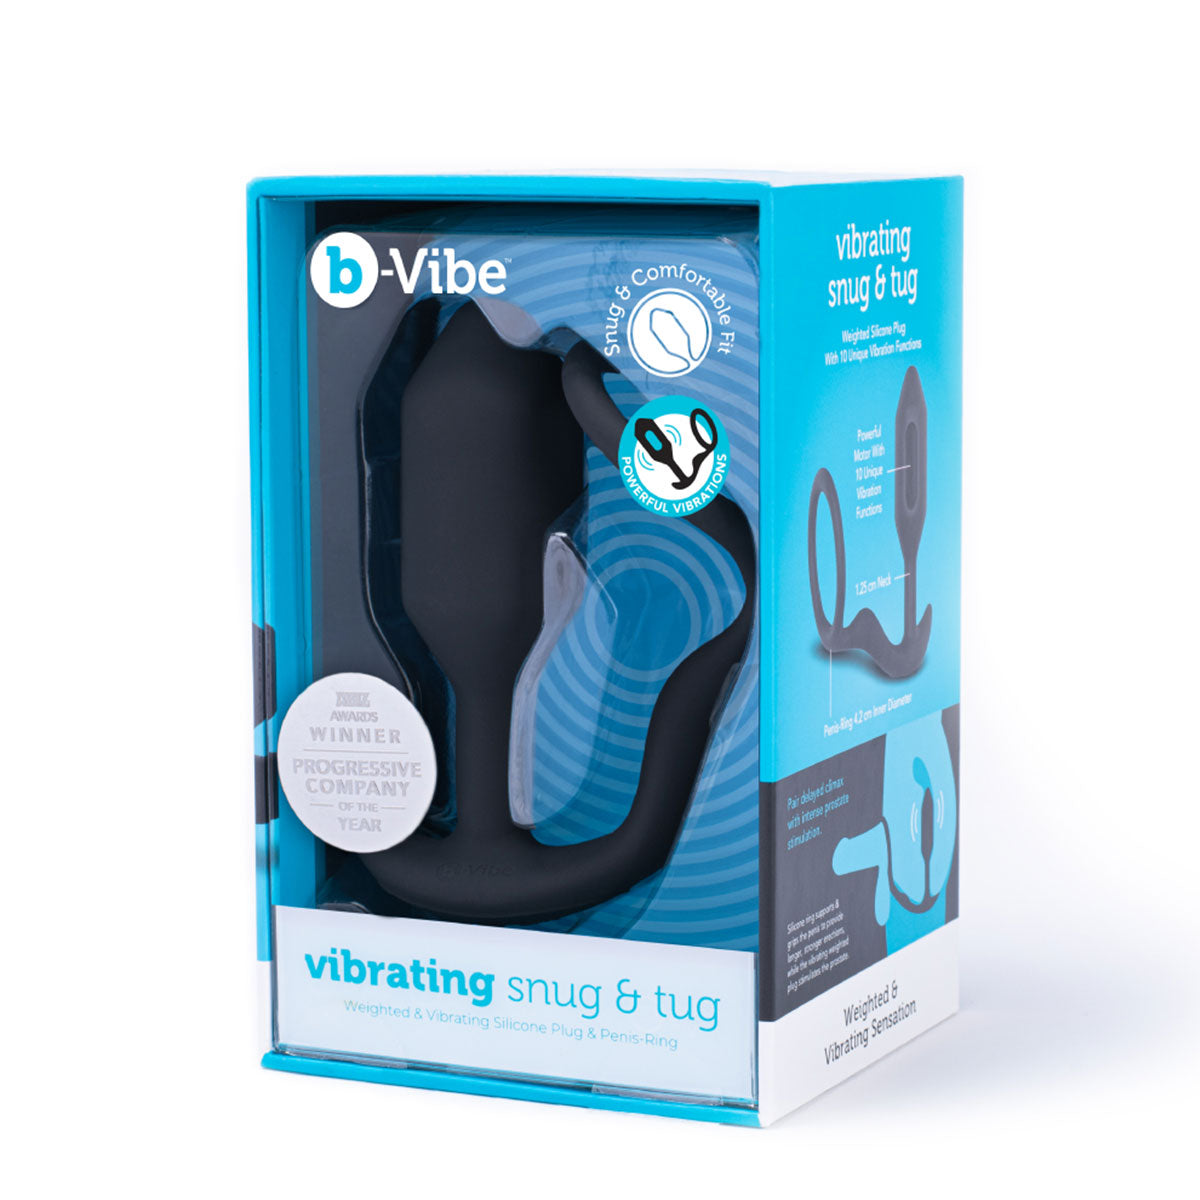 B-Vibe Vibrating Snug & Tug - Assorted Sizes